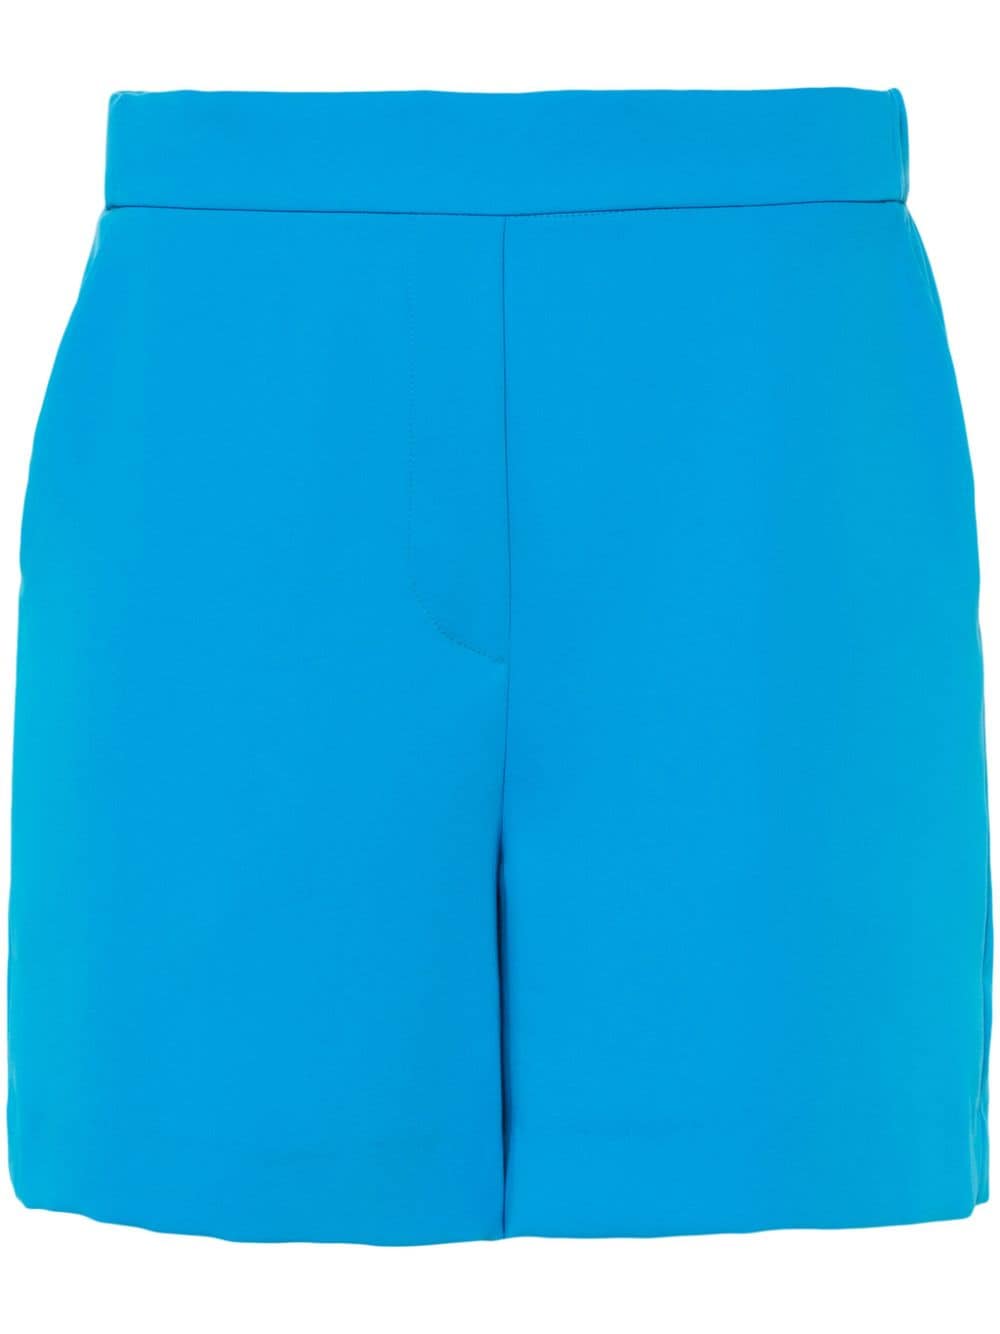 Shorts in crêpe fluido blu<br><br><br><br><br>